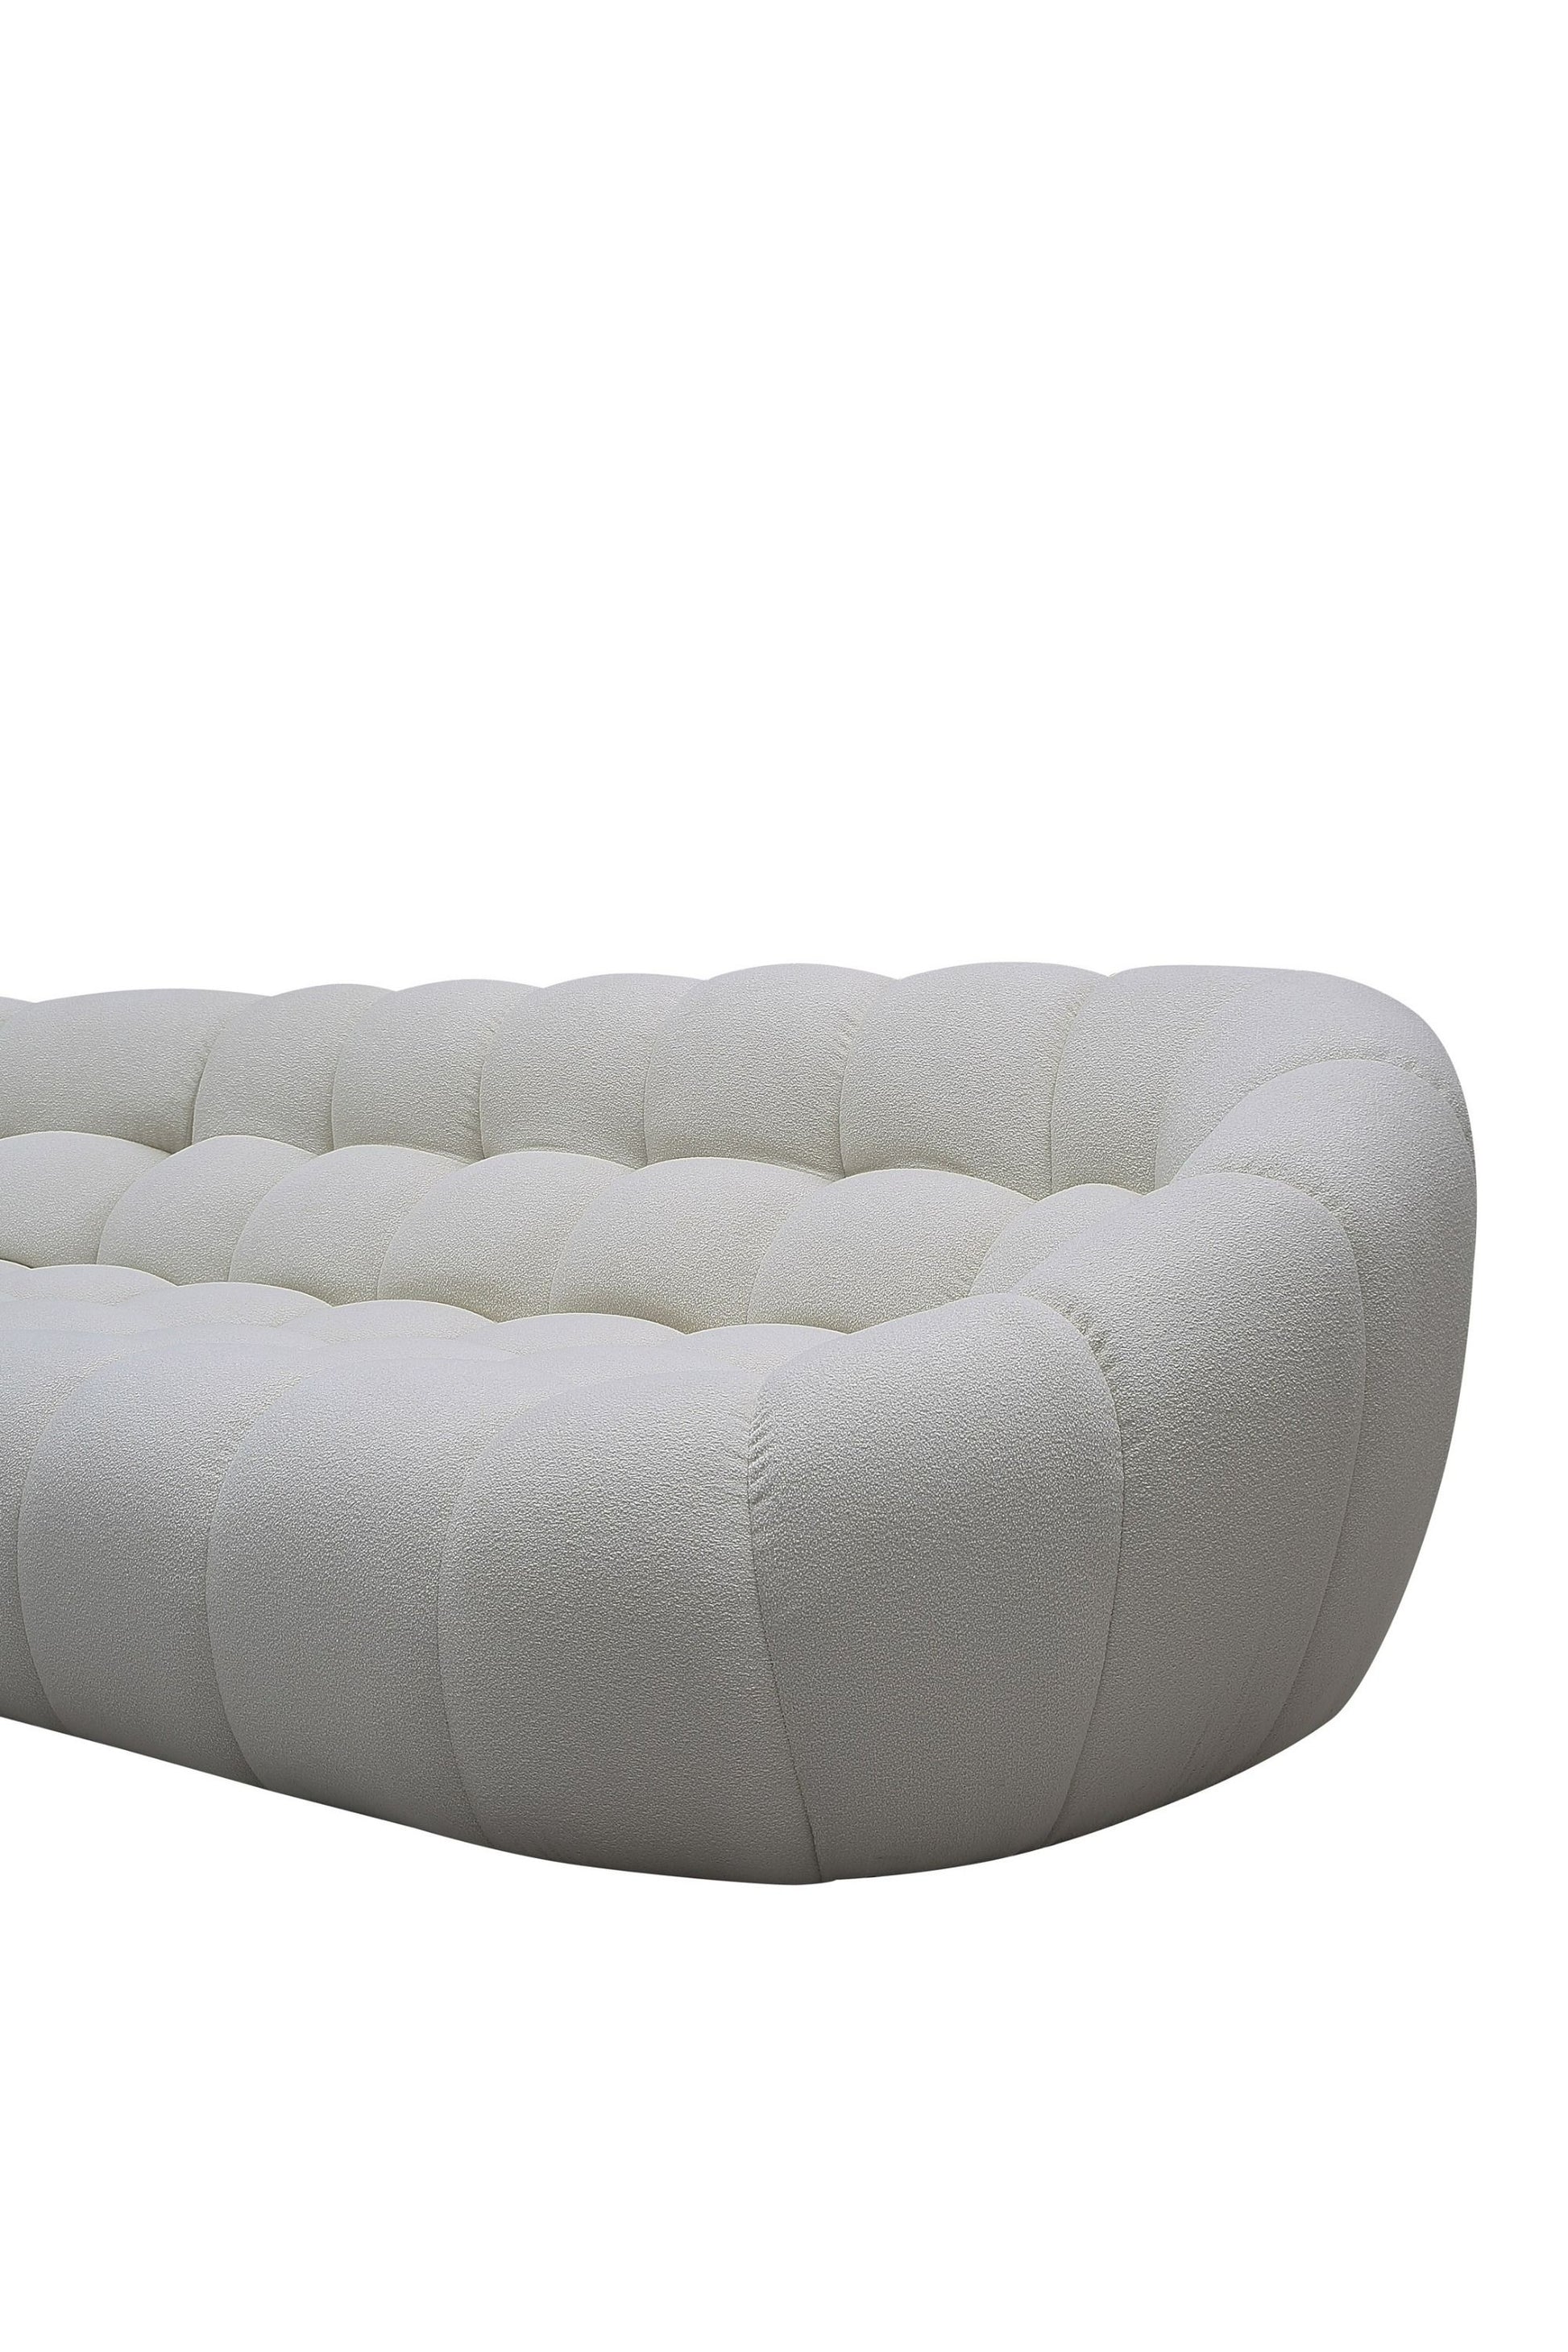 Divani Casa Yolonda Off-White Fabric Sectional Sofa Alt 09